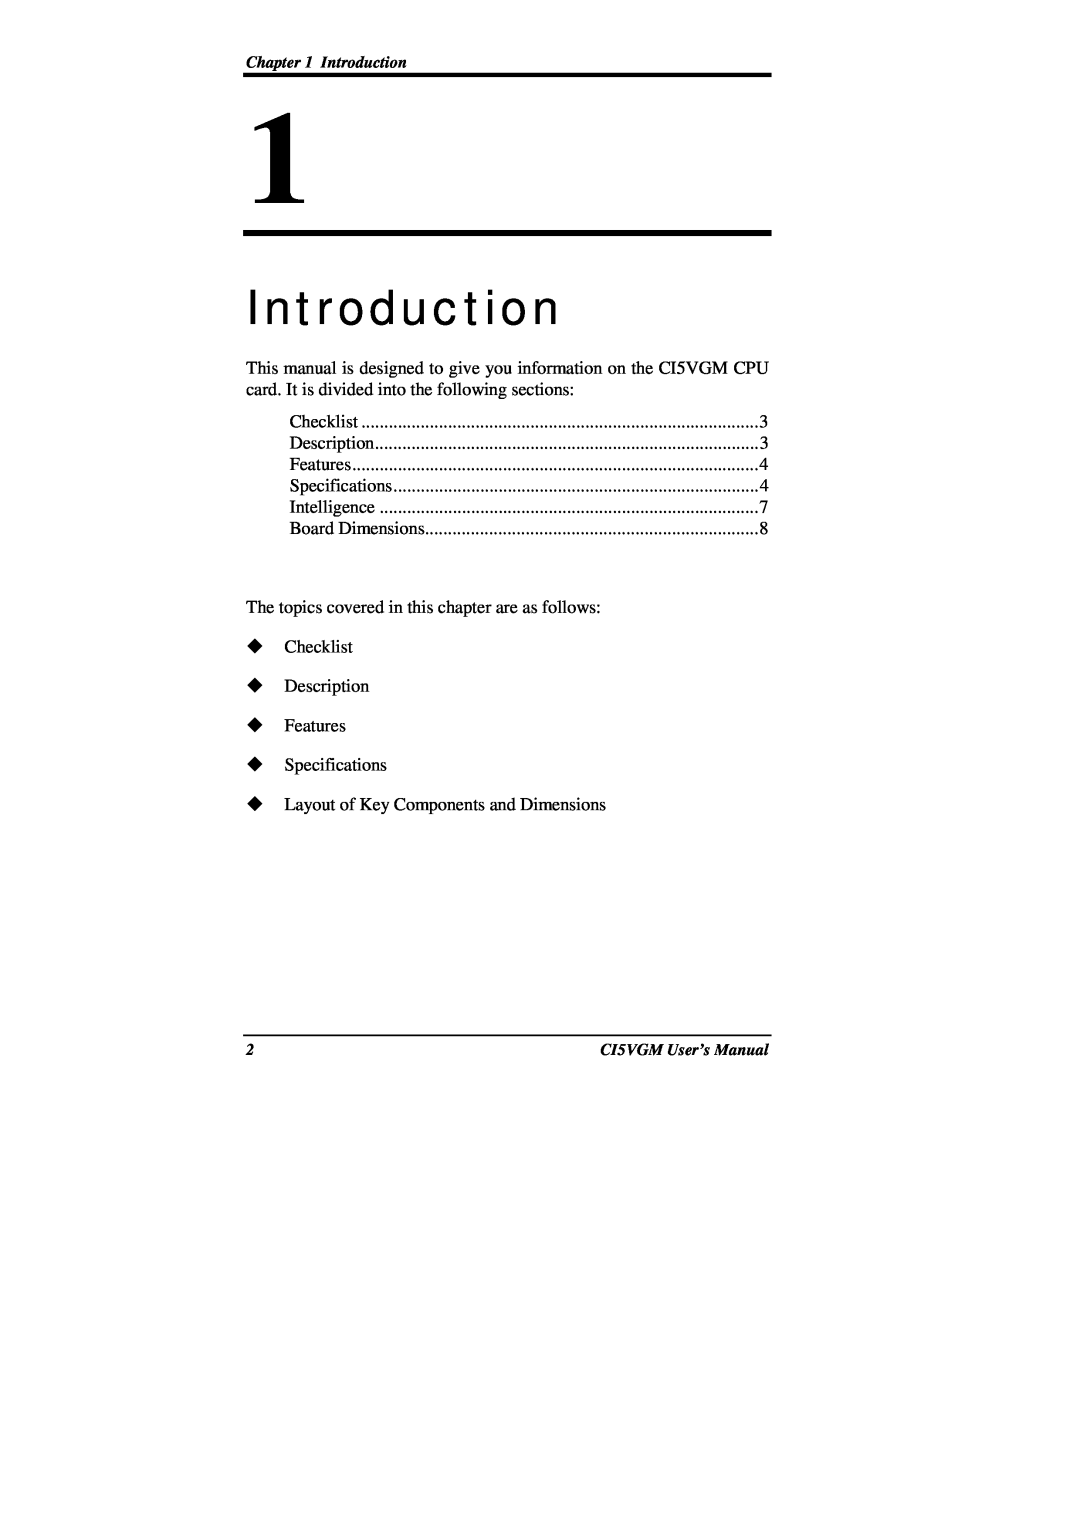 IBM CI5VGM Series user manual Introduction 